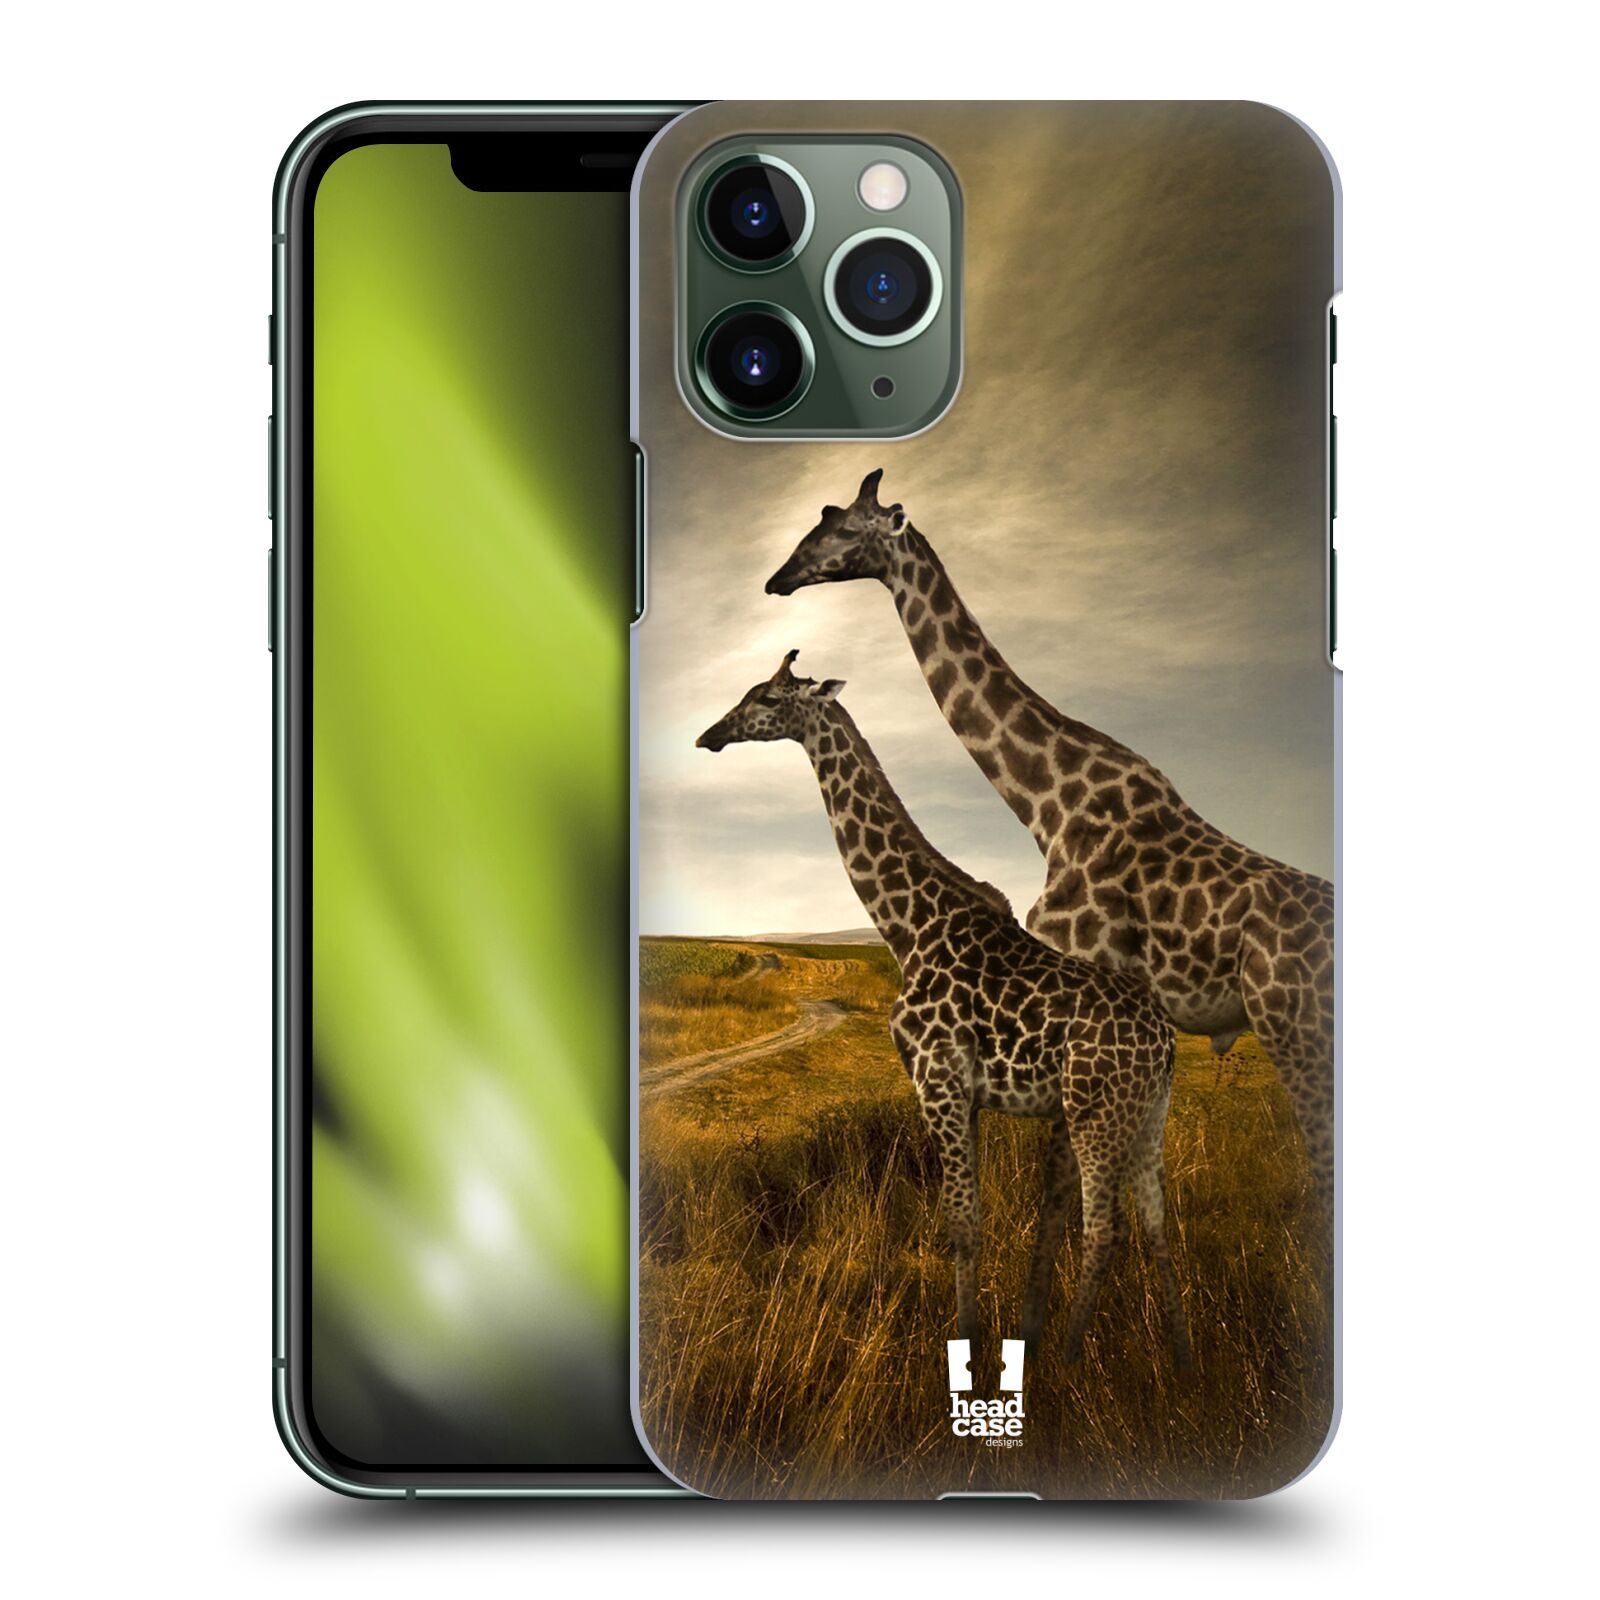 Pouzdro na mobil Apple Iphone 11 PRO - HEAD CASE - vzor Divočina, Divoký život a zvířata foto AFRIKA ŽIRAFY VÝHLED